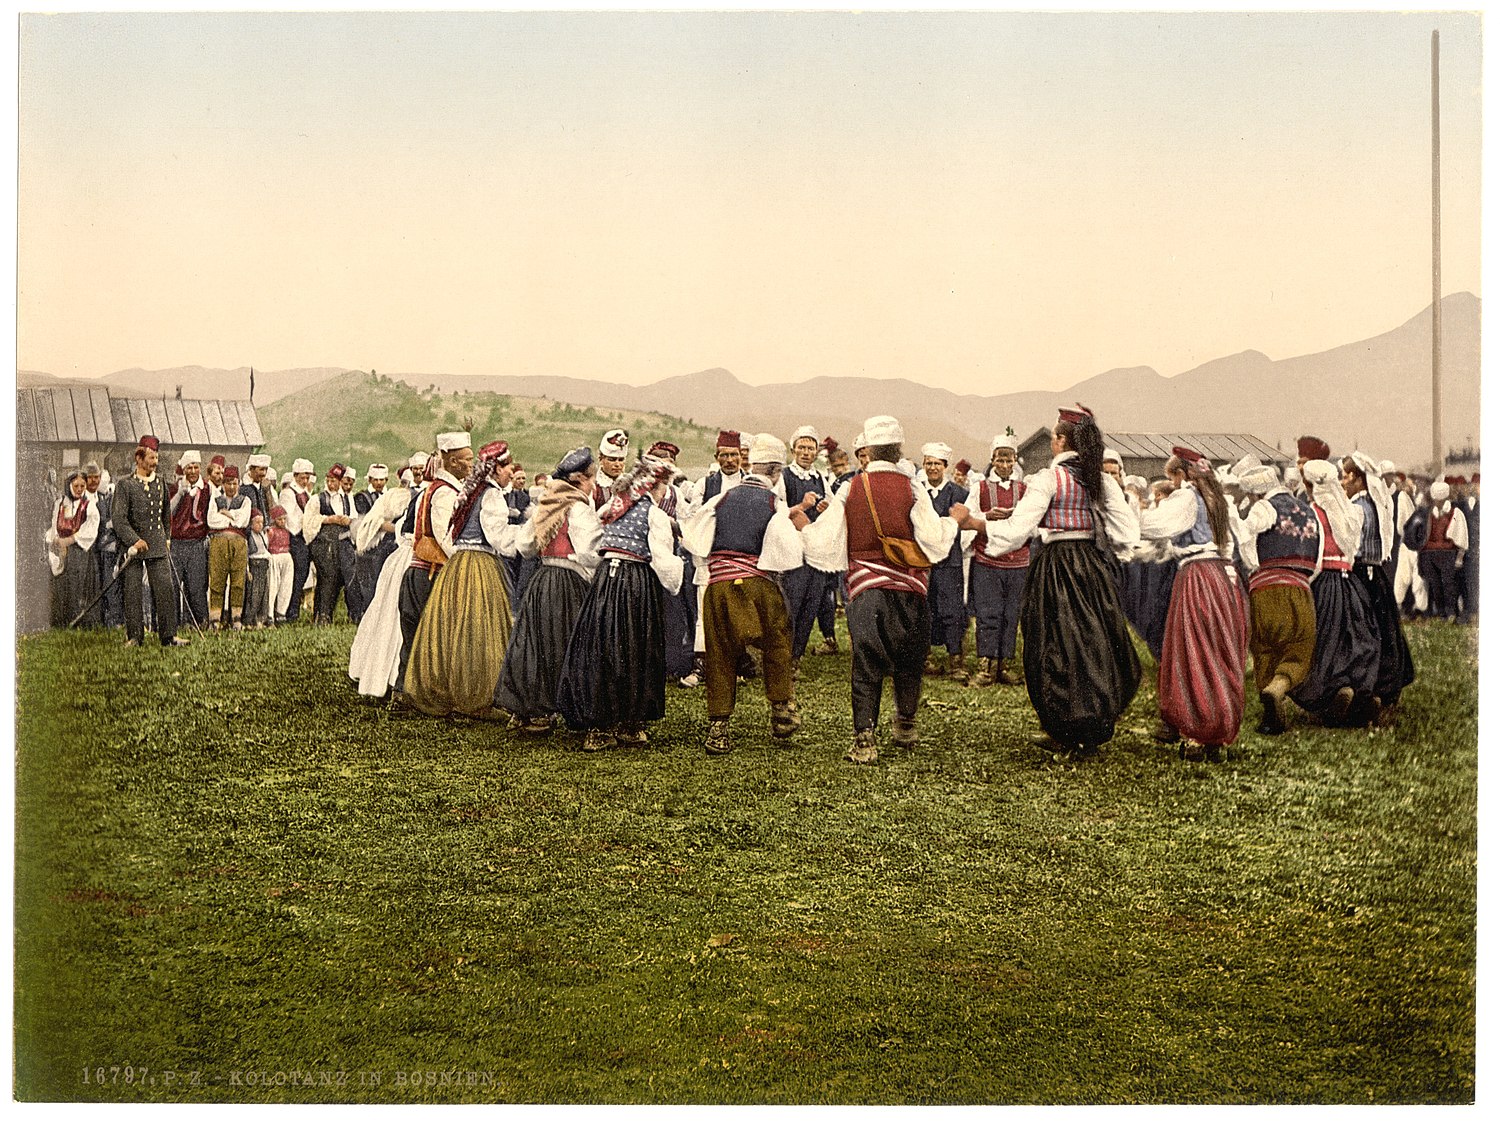 Peasants dancing, Bosnia, Austro-Hungary-LCCN2002710708.jpg